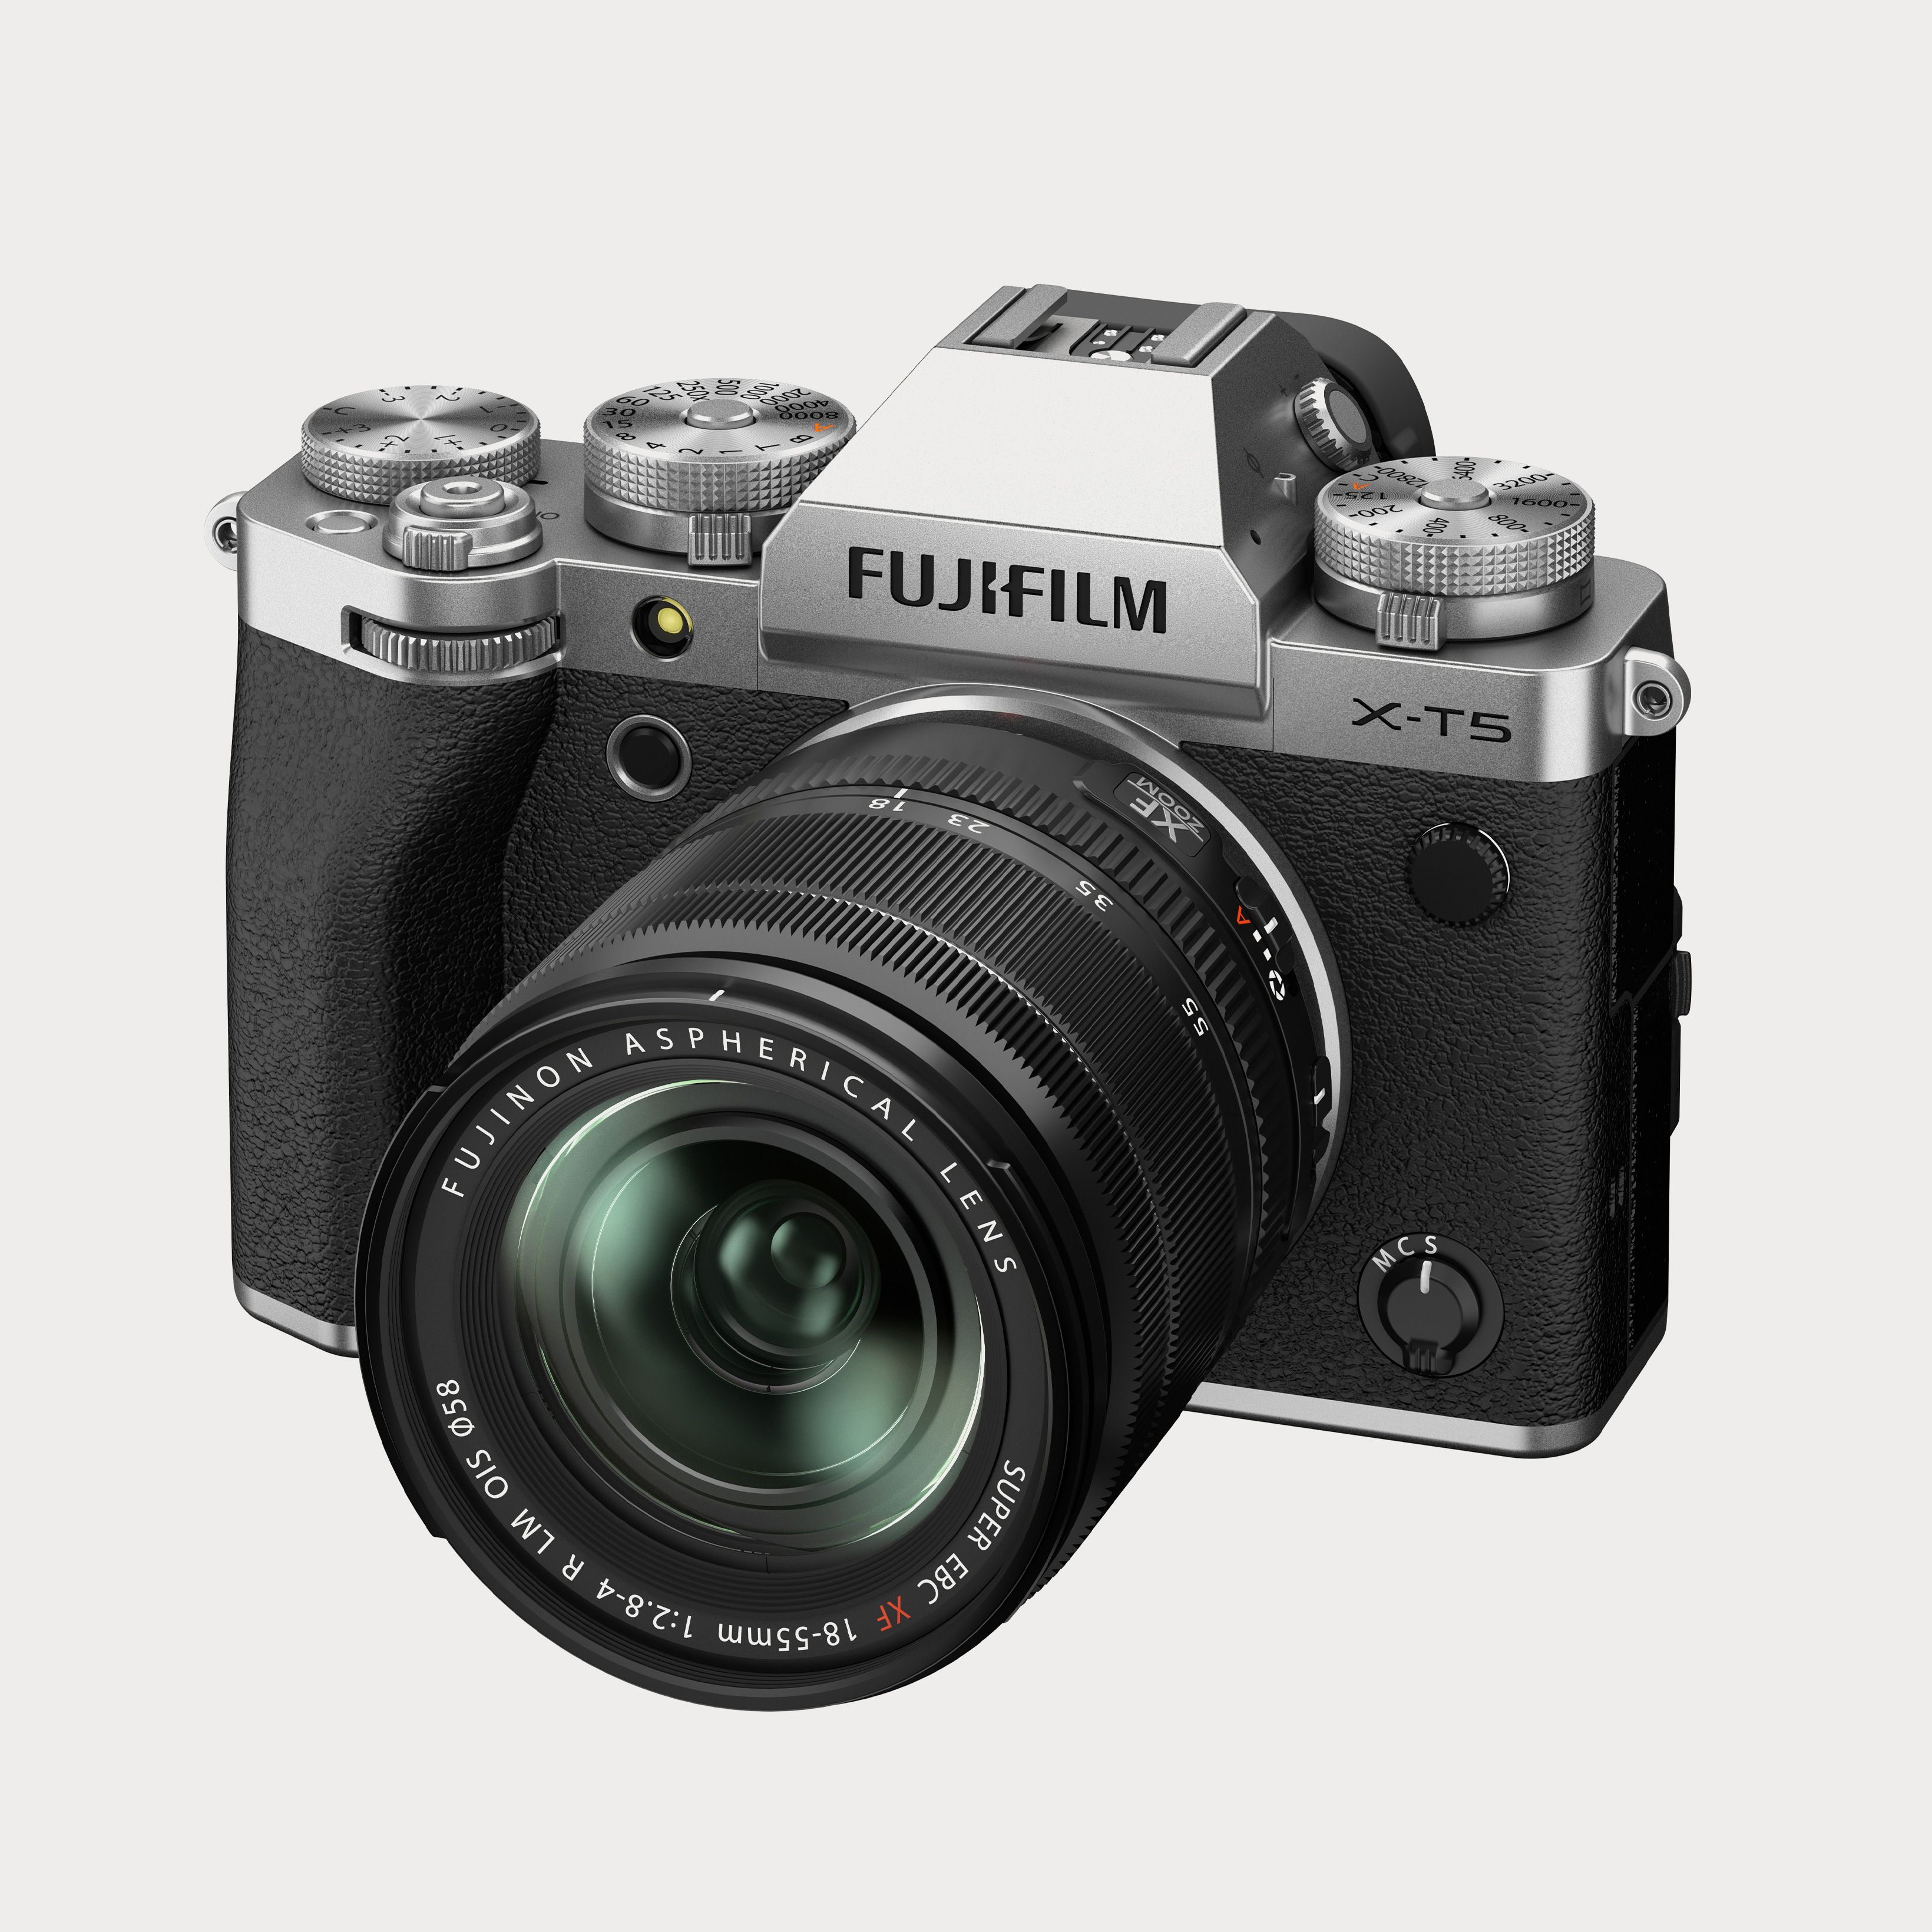 Fujifilm X-T5 Mirrorless Camera - Silver / with Fujifilm XF18-55mm 